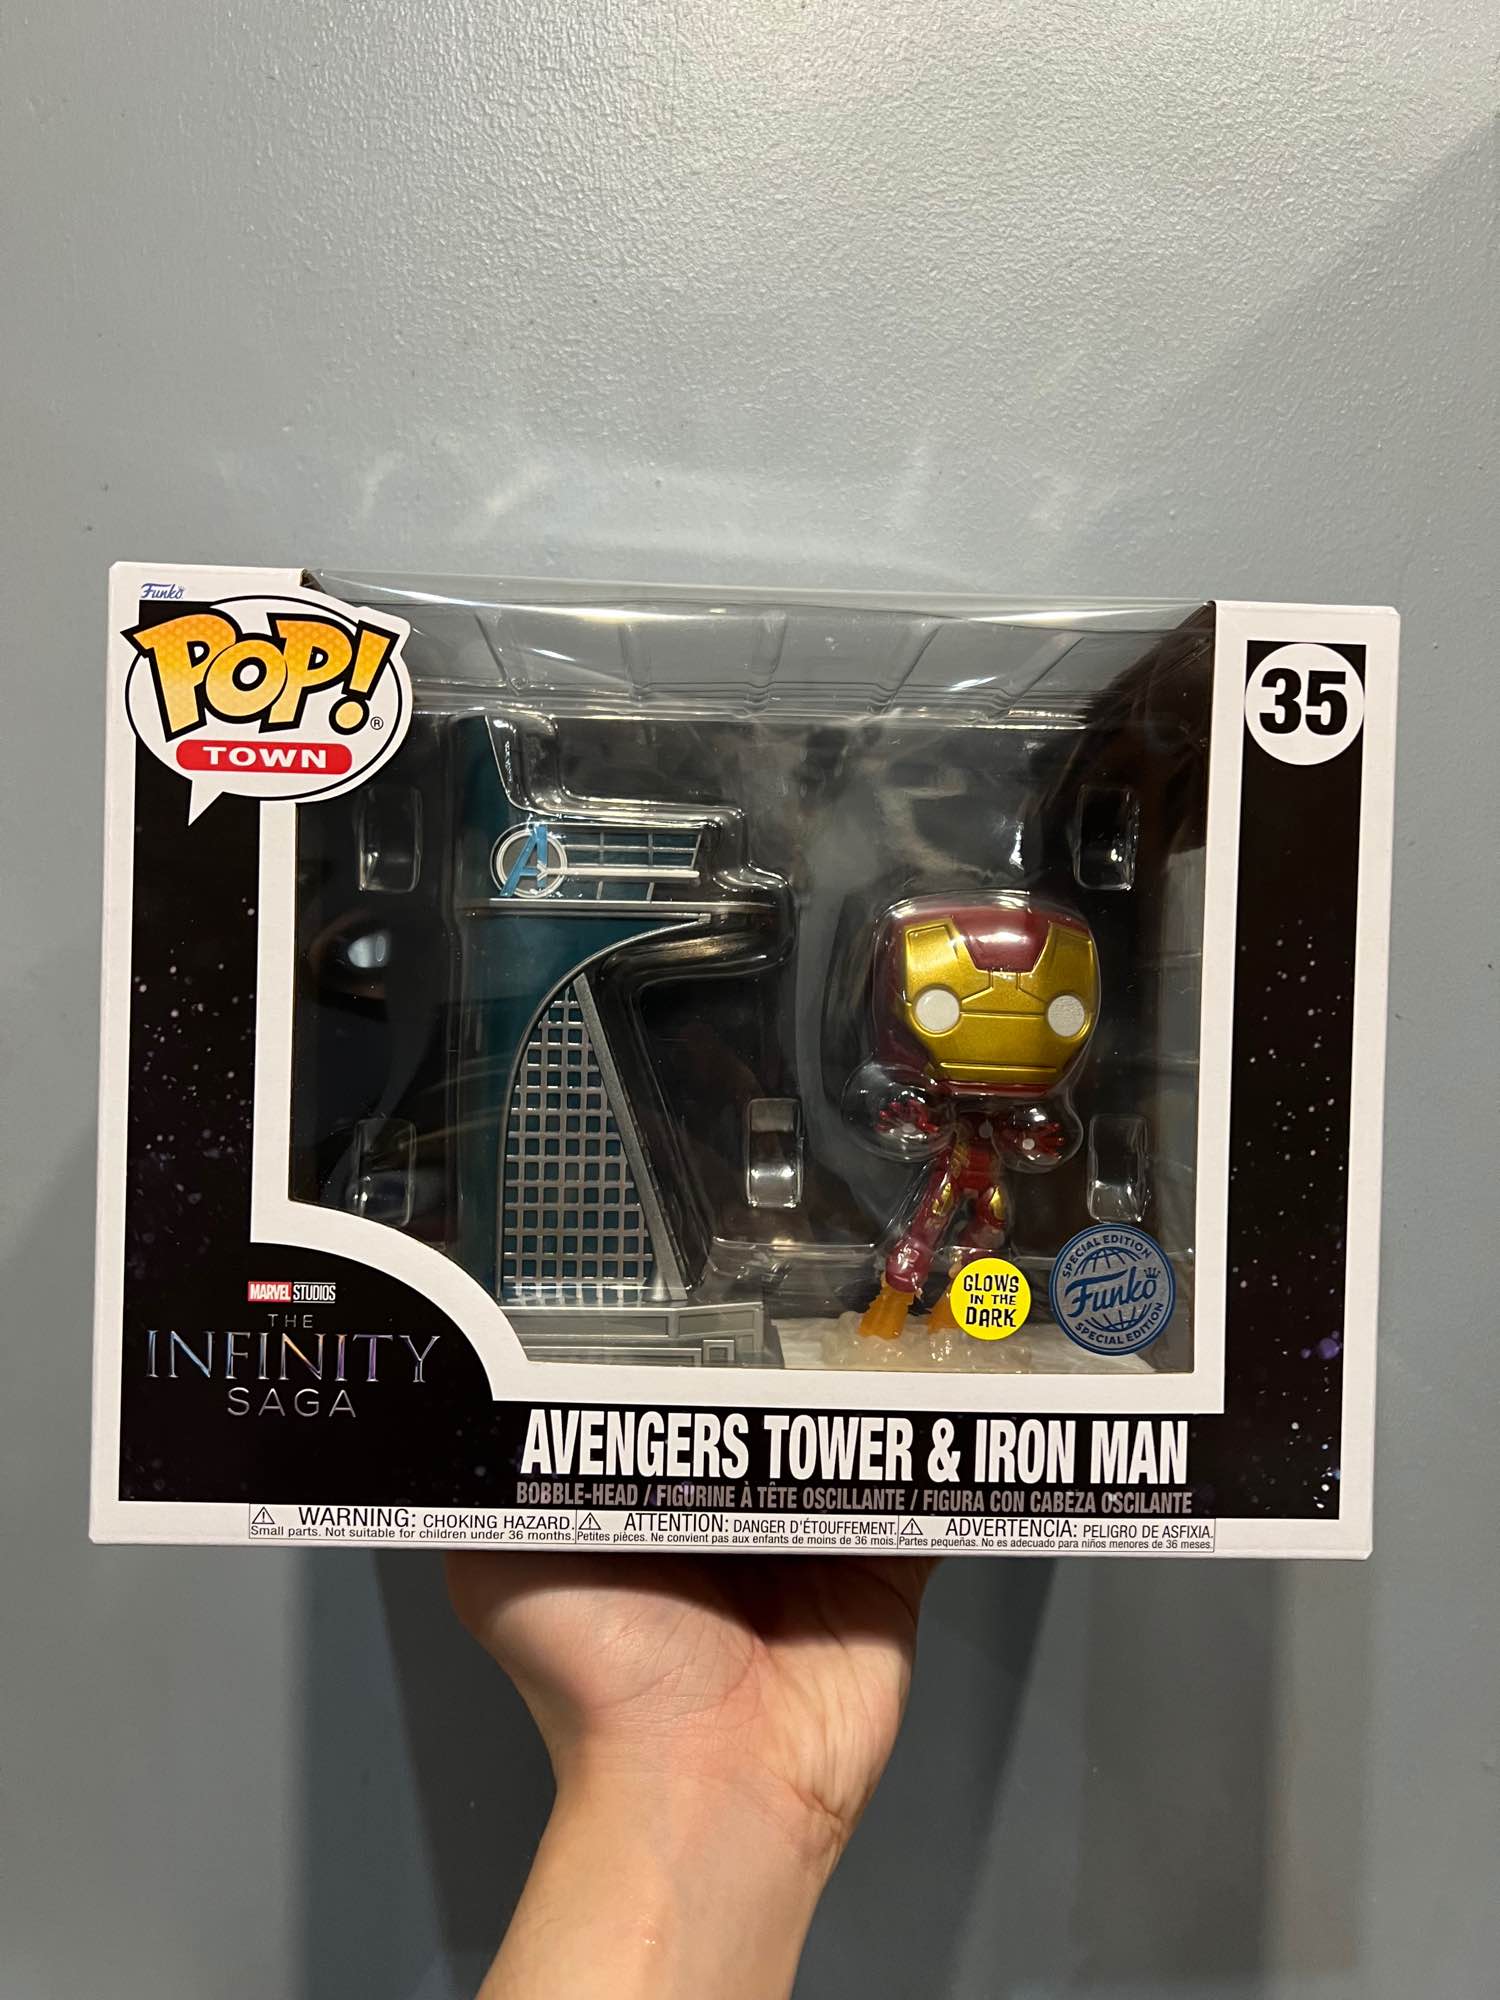 Buy Pop! Town Avengers Tower & Iron Man (Glow) at Funko.